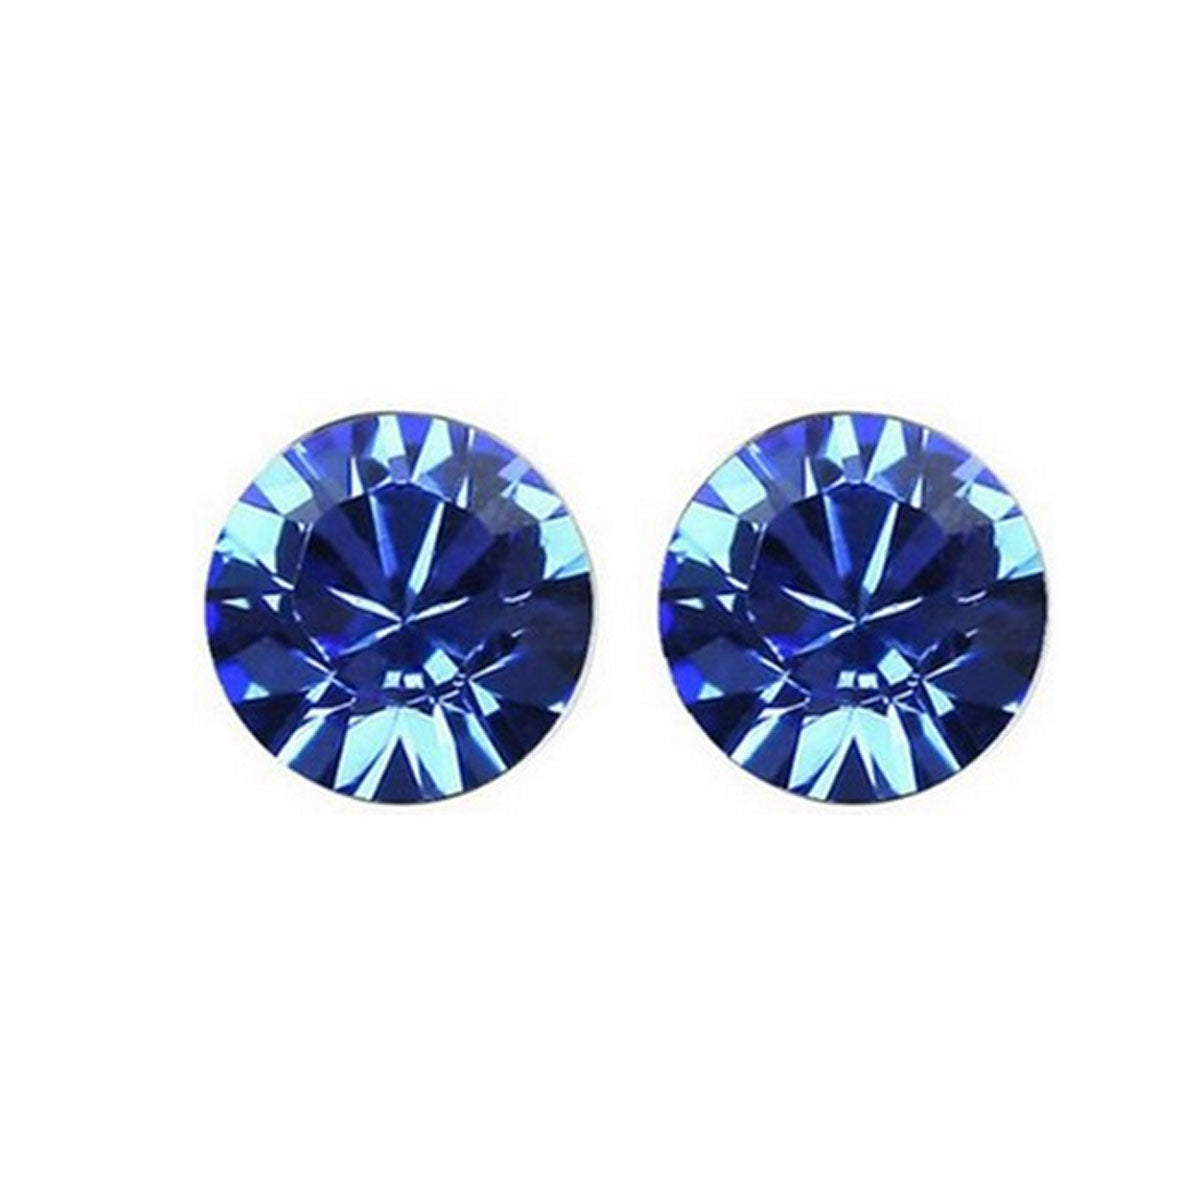 Large Royal Blue Crystal Stud Earrings